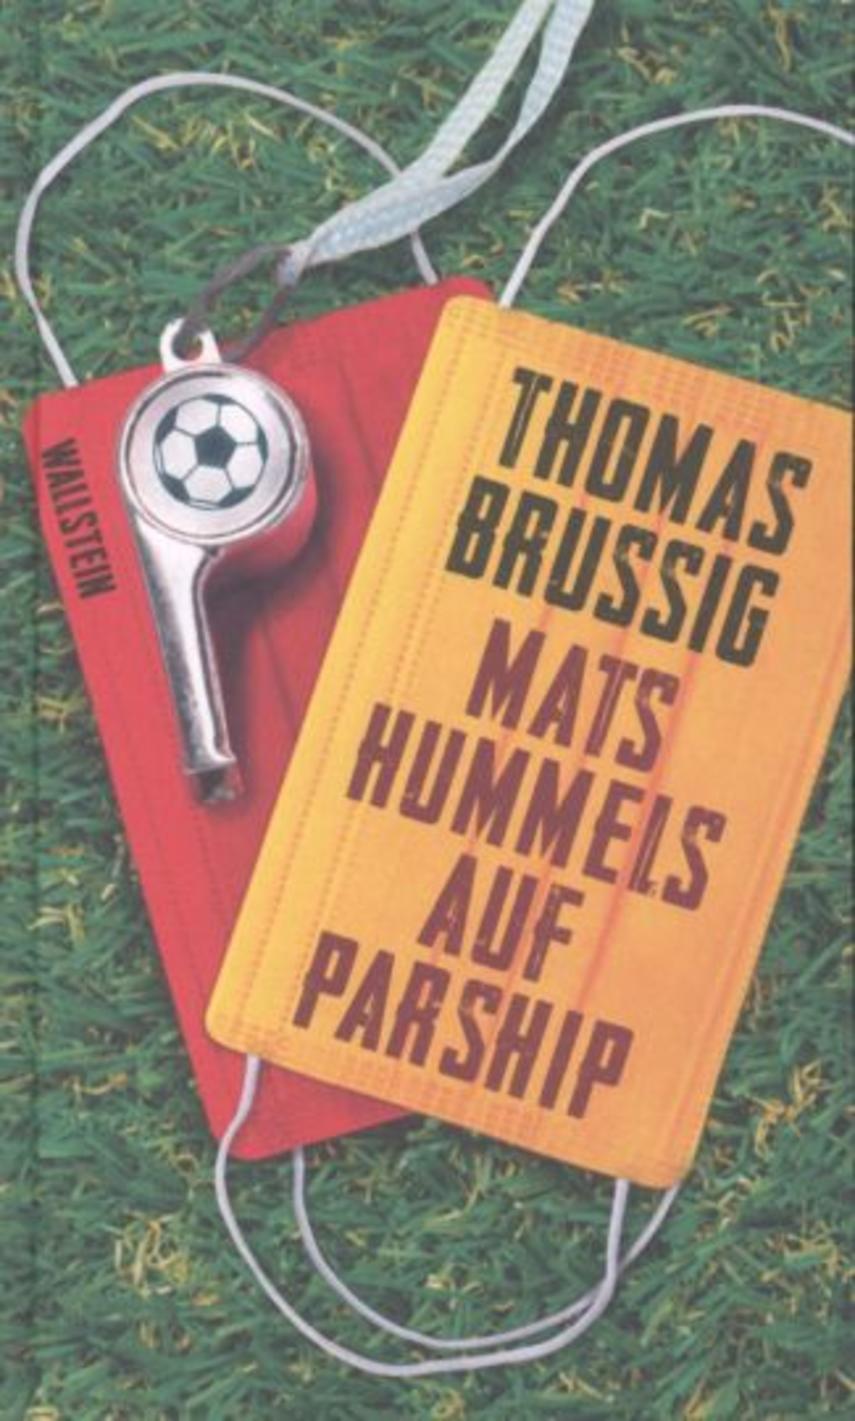 Thomas Brussig: Mats Hummels auf Parship